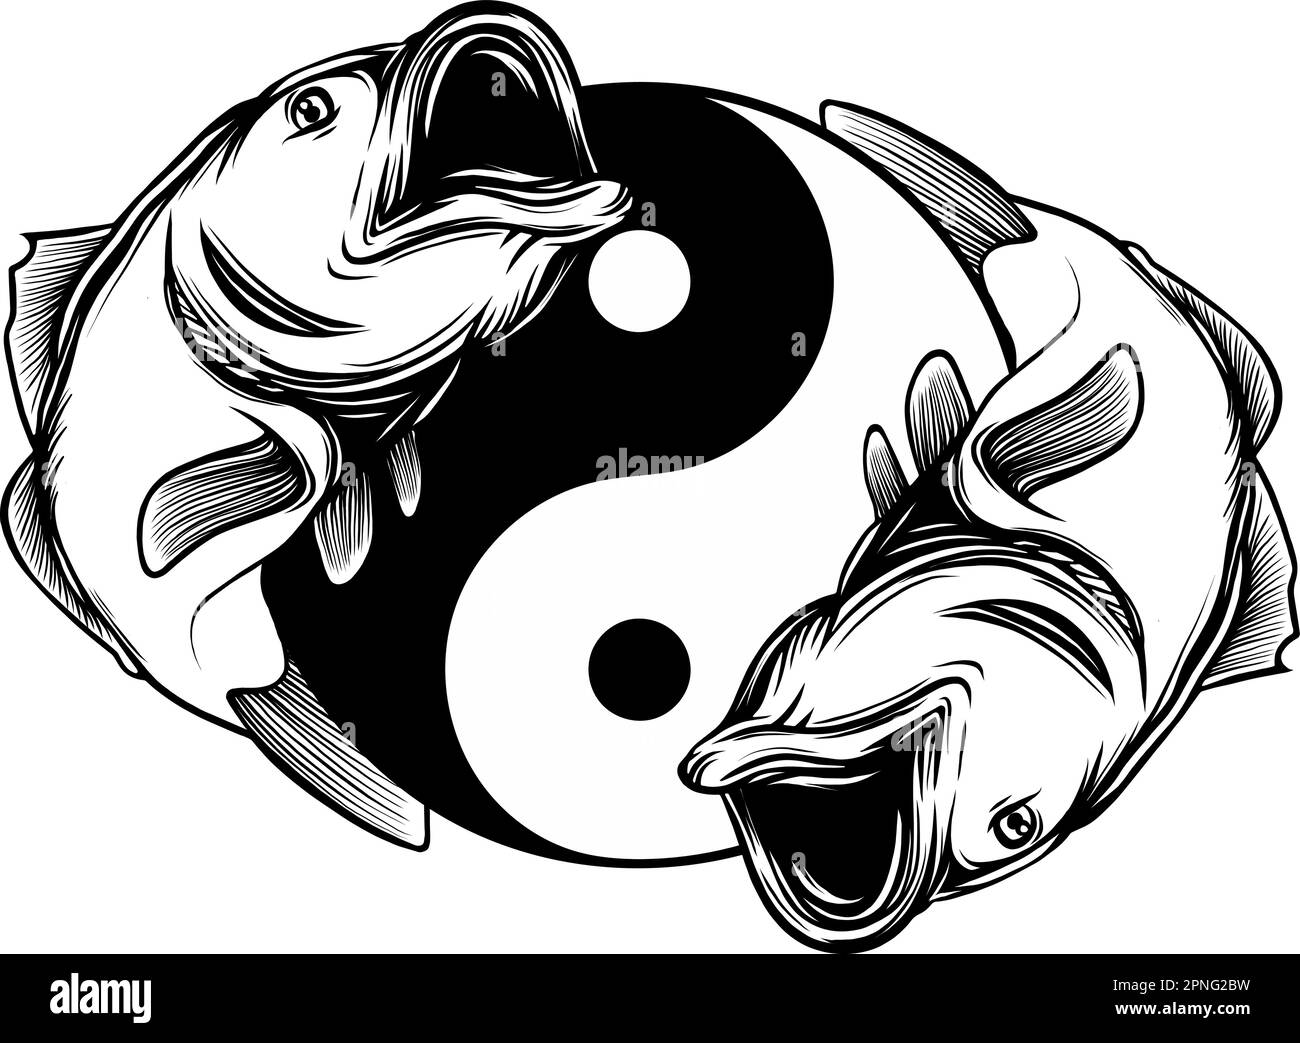 Ying yang symbol of harmony and balance. Hand drawn outline Koi fish vector illustration Stock Vector